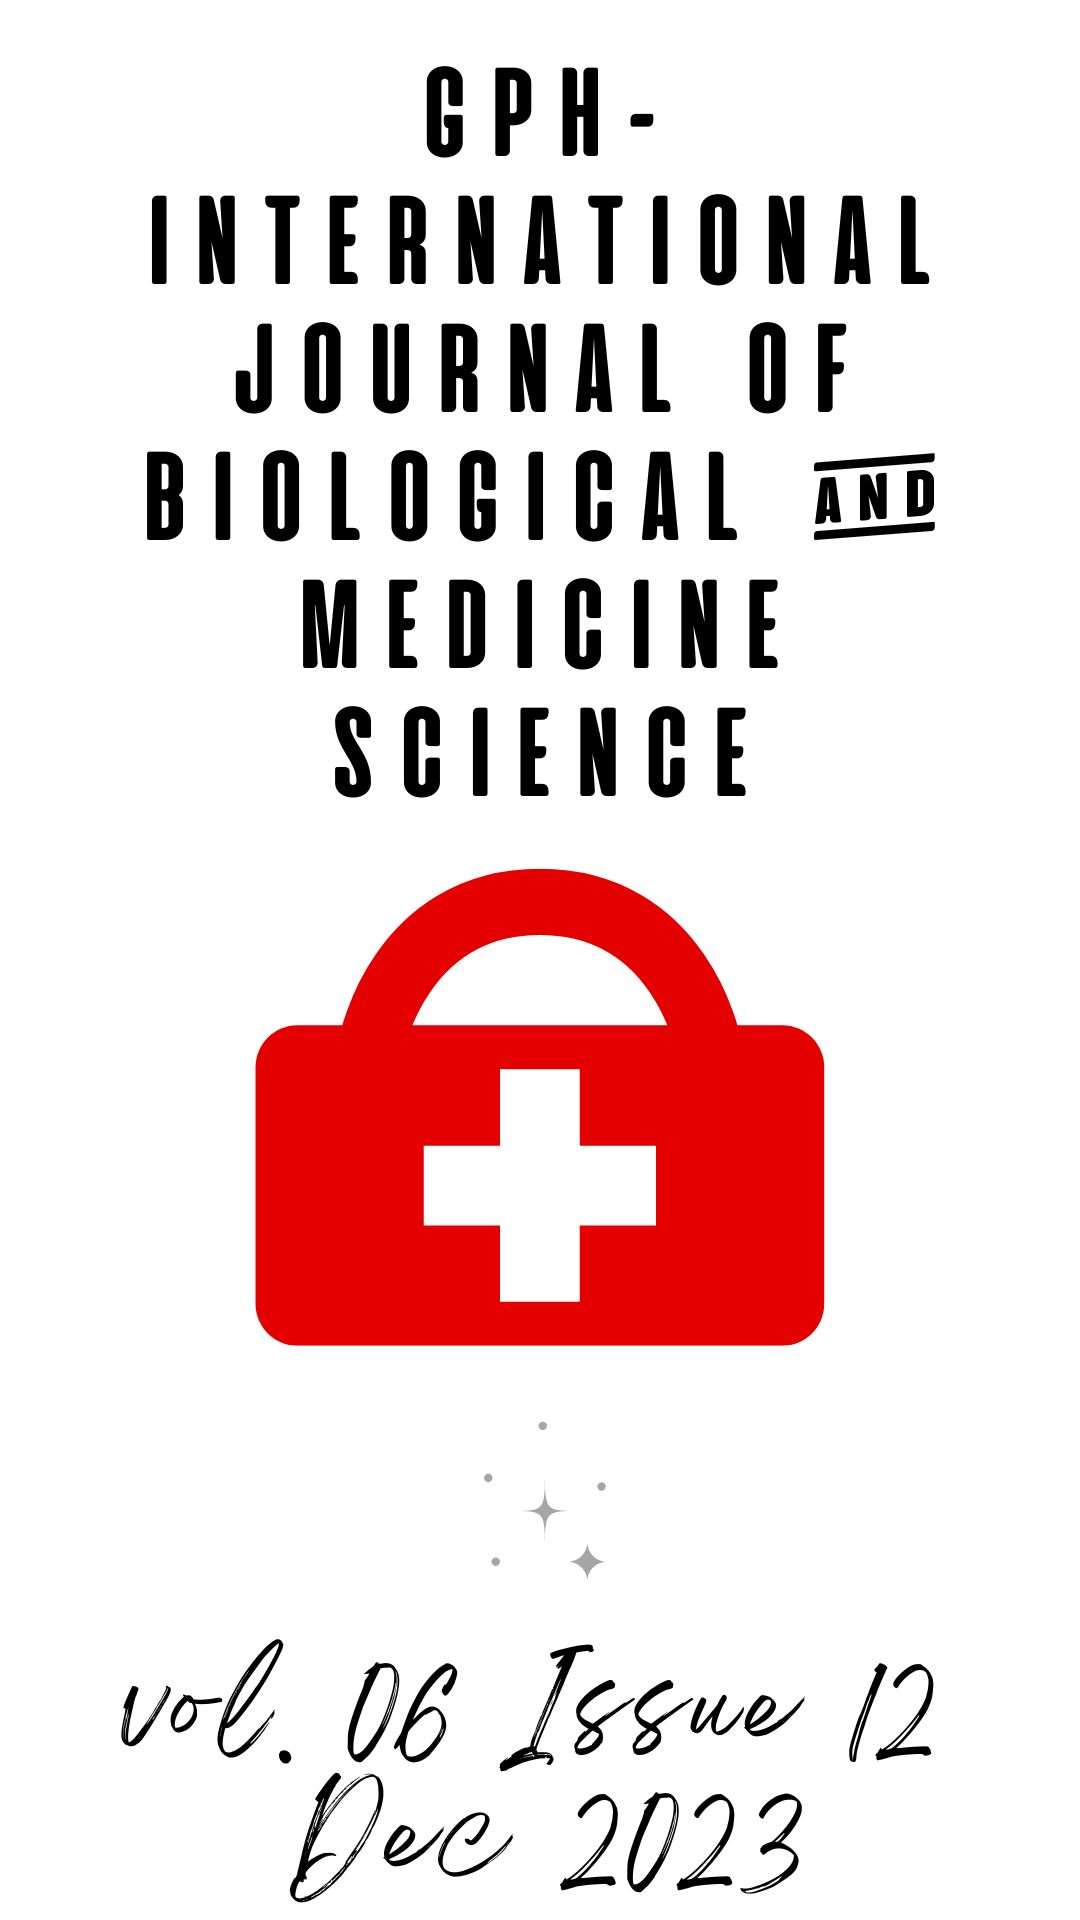 GPH-International Journal of Biological & Medicine Science